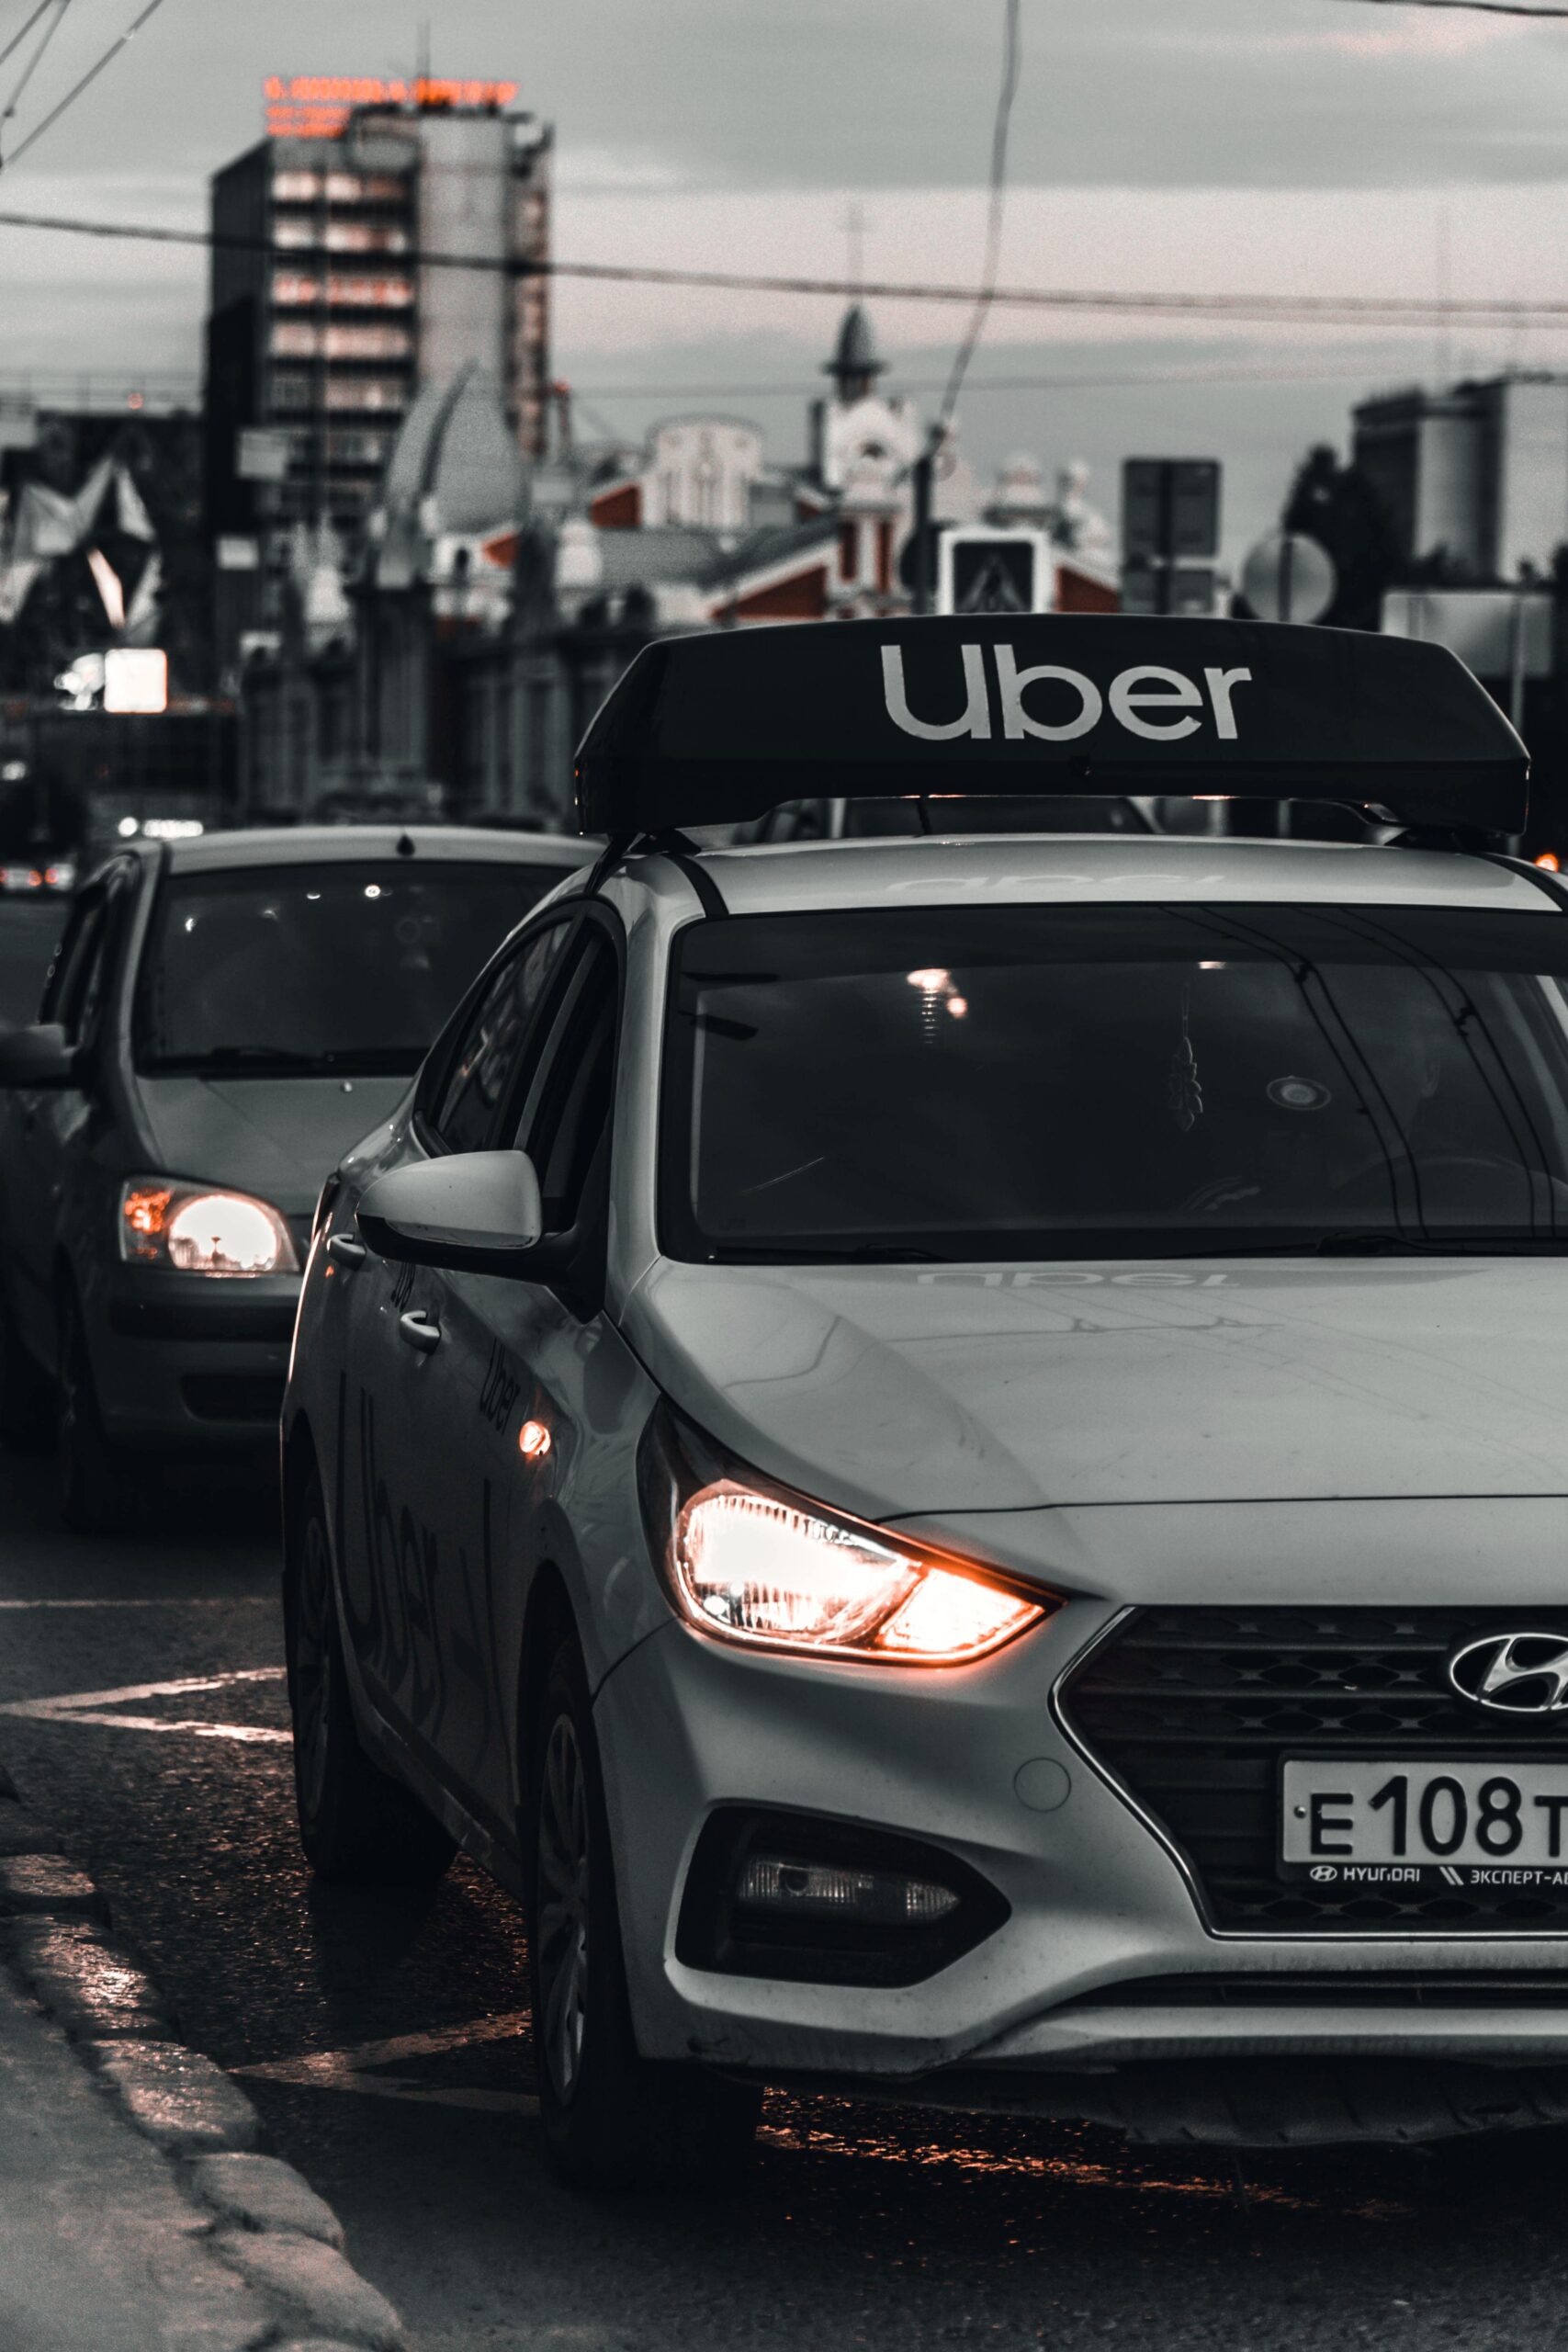 Is Uber Cheaper Than Taxi in Dubai?